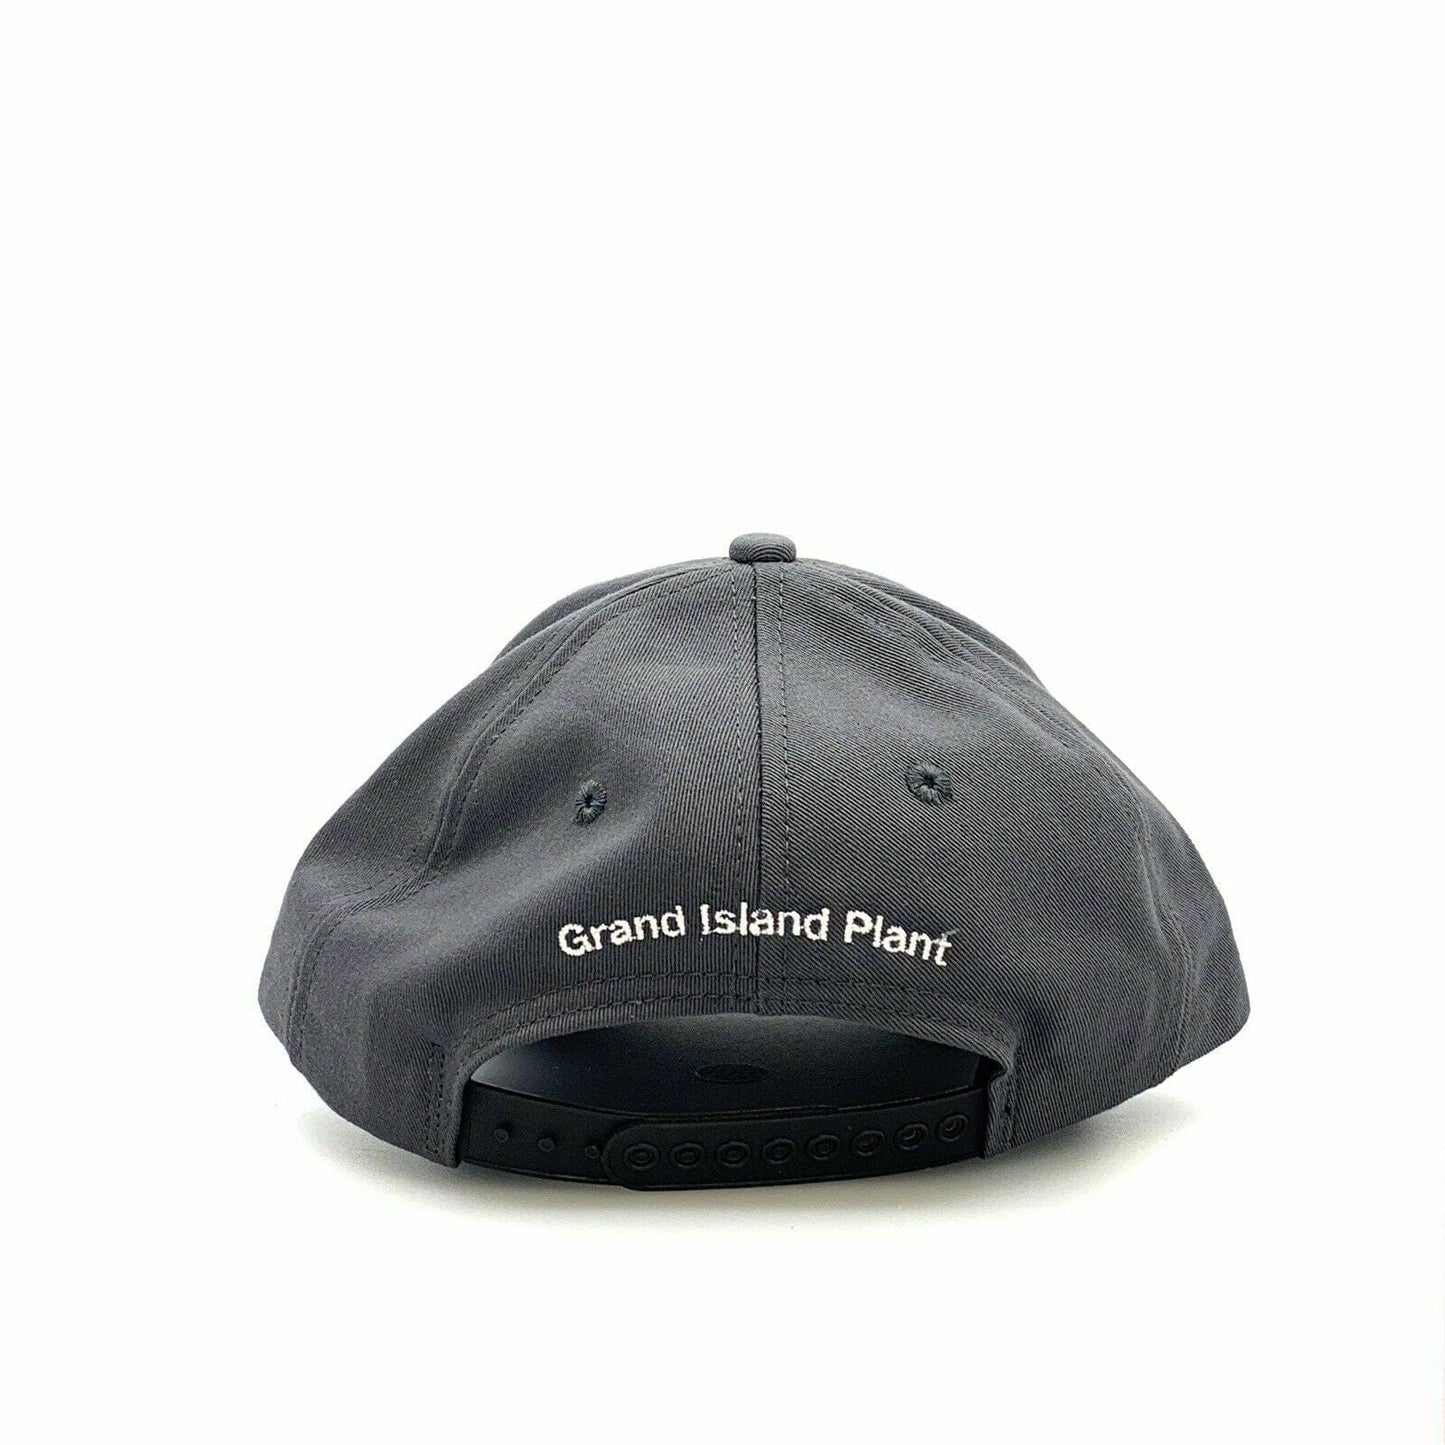 CASE IH Grand Island Plant Employee Dad Baseball Hat, Gray - OSFA